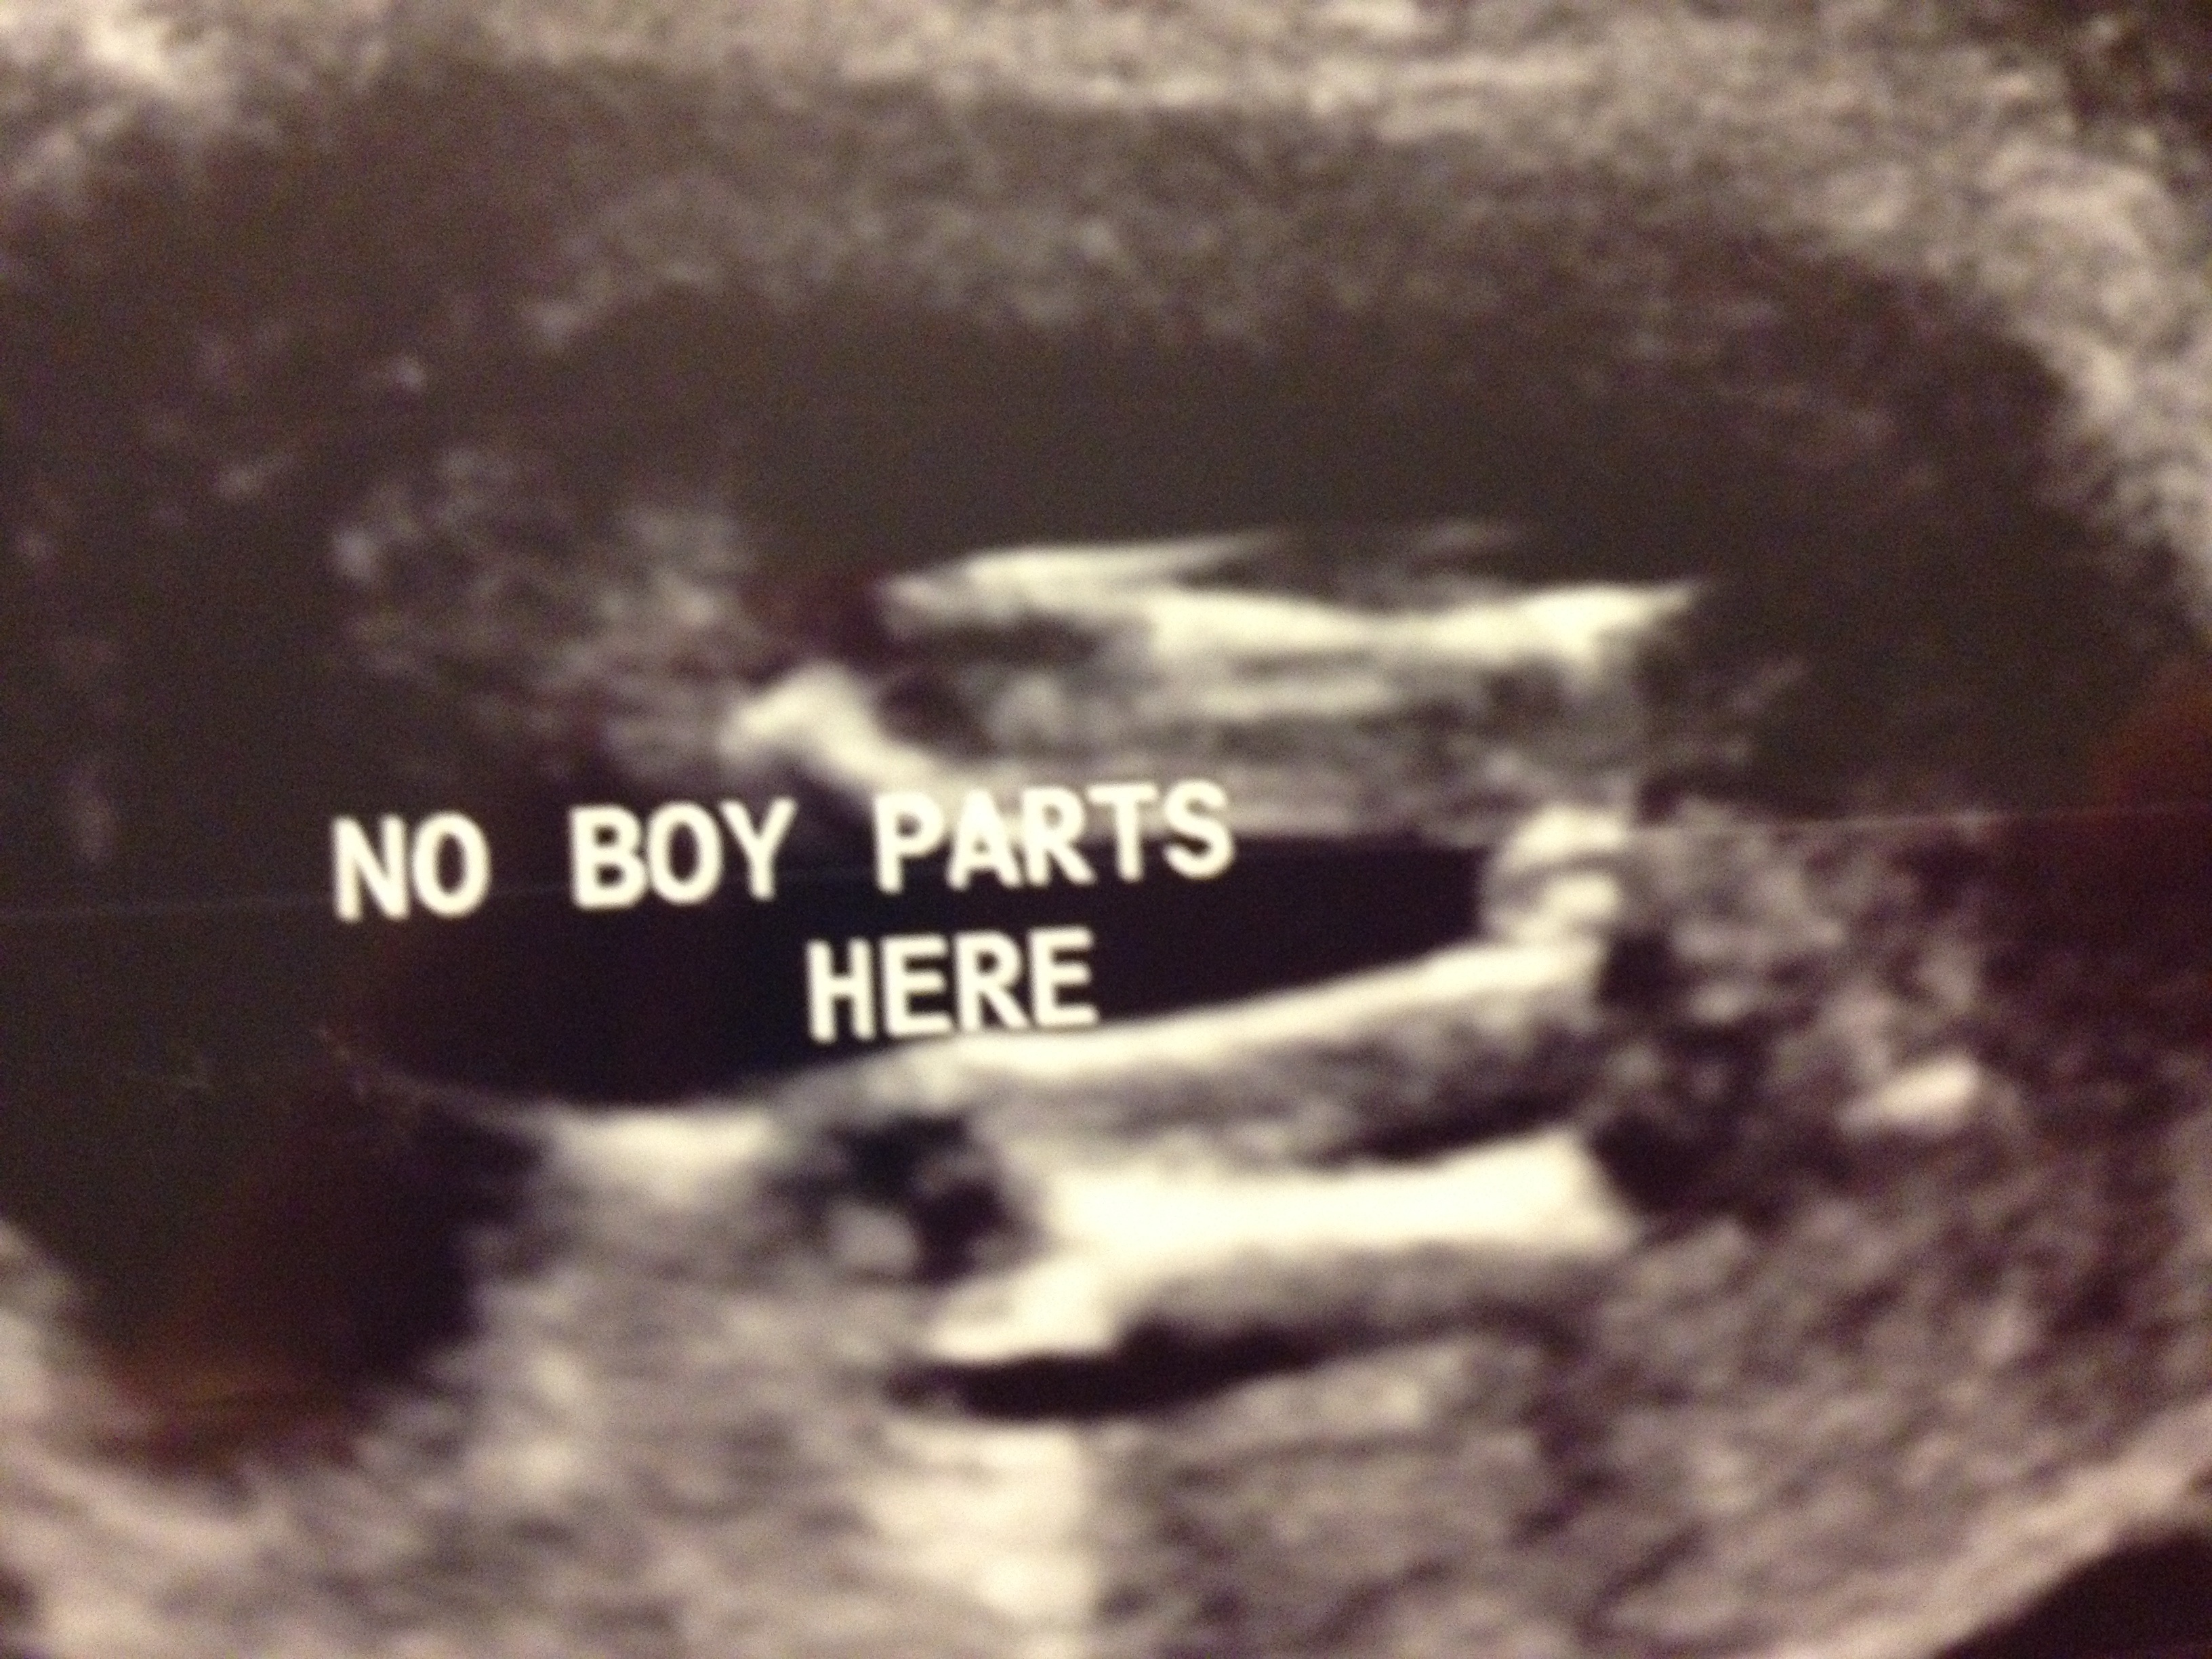 16 week ultrasound pic of girl?